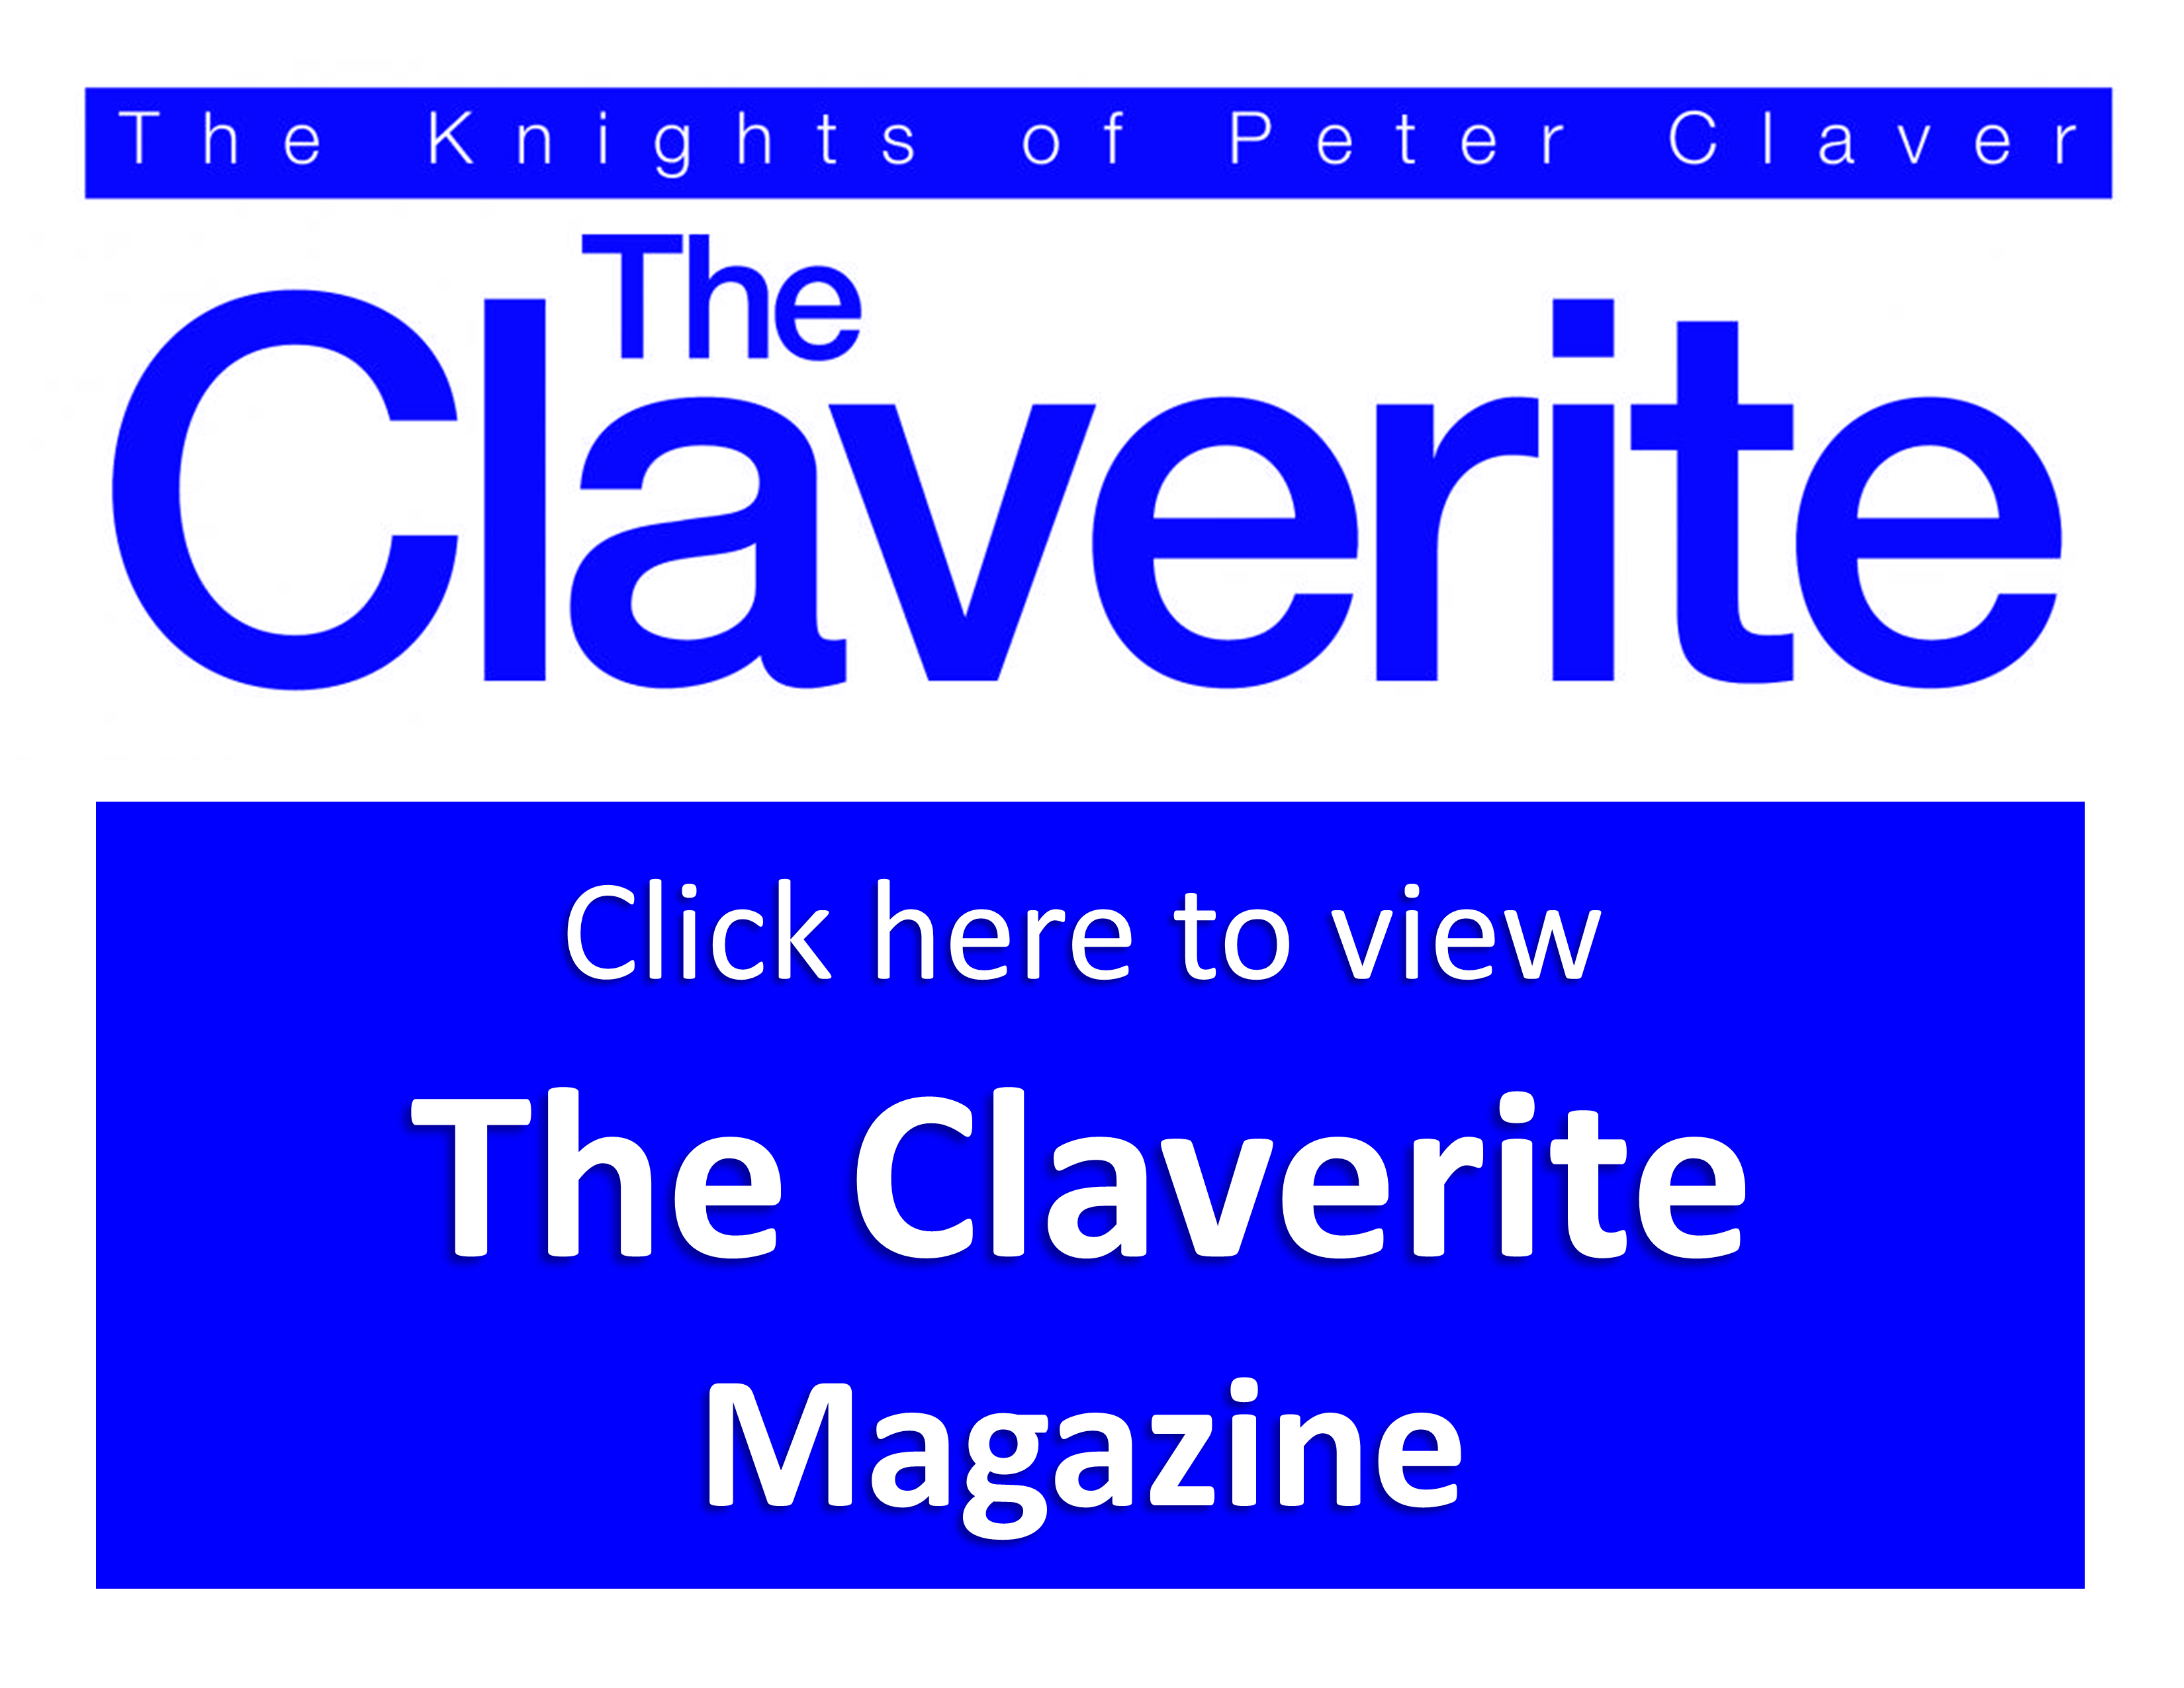 The Claverite Image Link